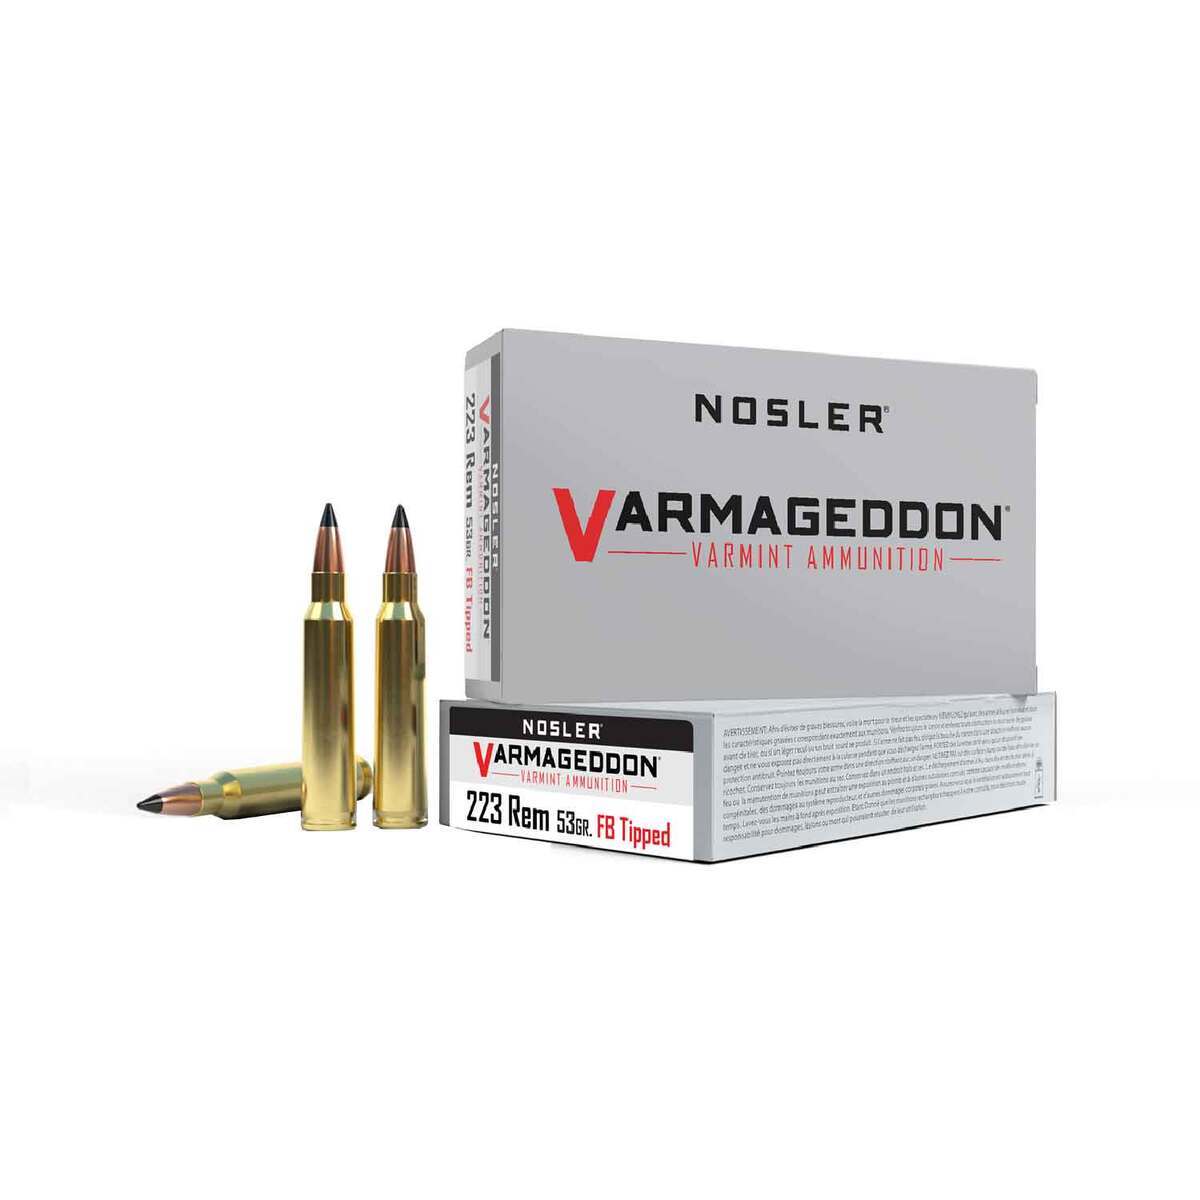 Shop 223 Remington Ammo at Best Price - Defender Ammunition